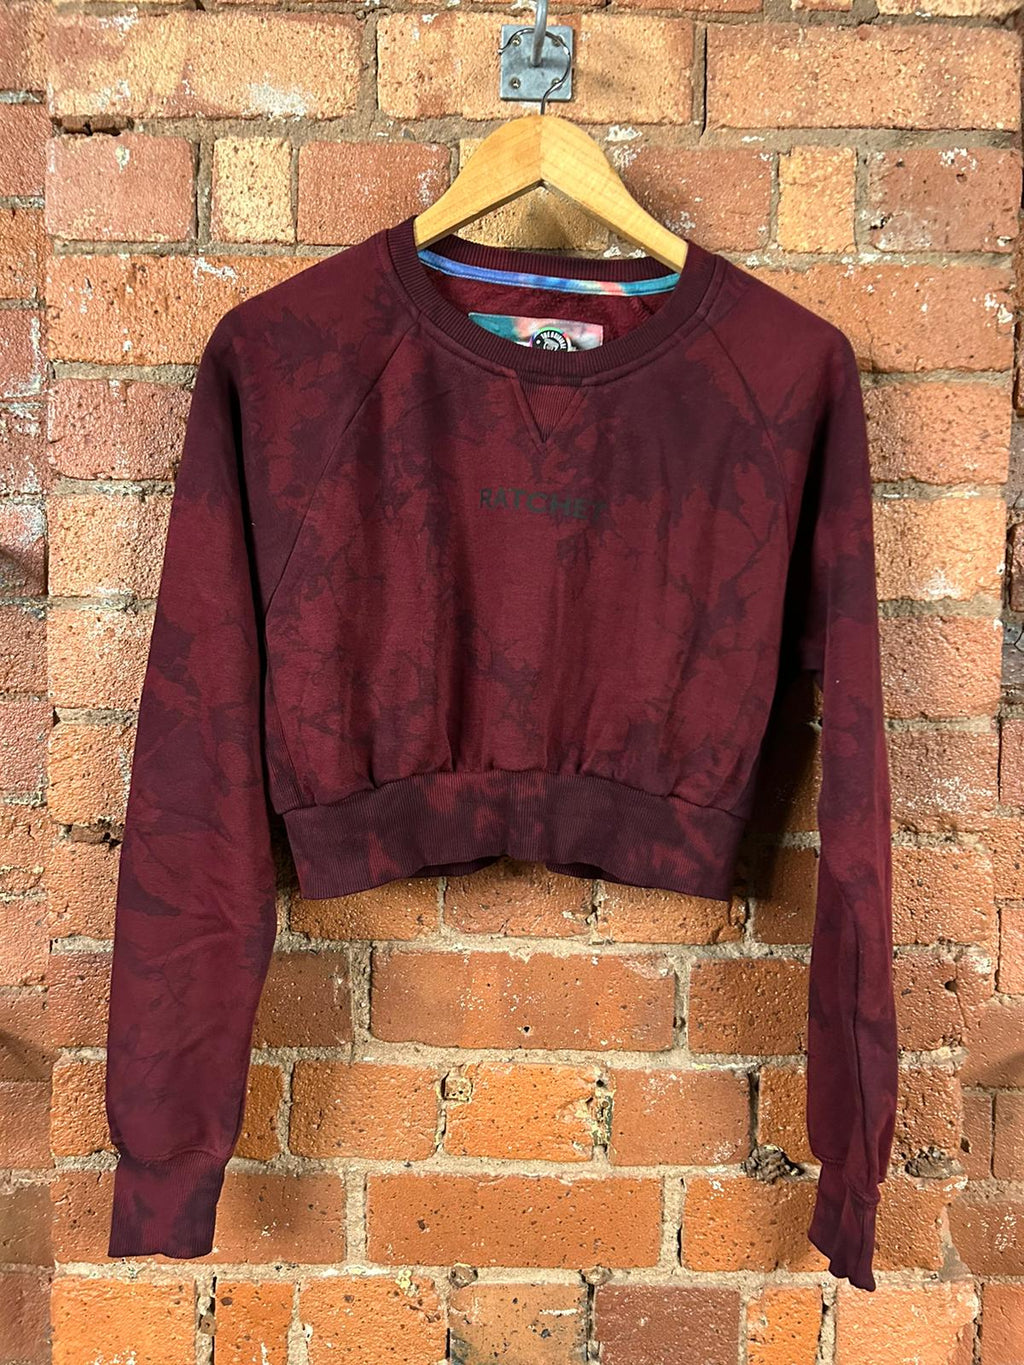 SALE Adult XS Burgundy/Black Cropped Sweatshirt